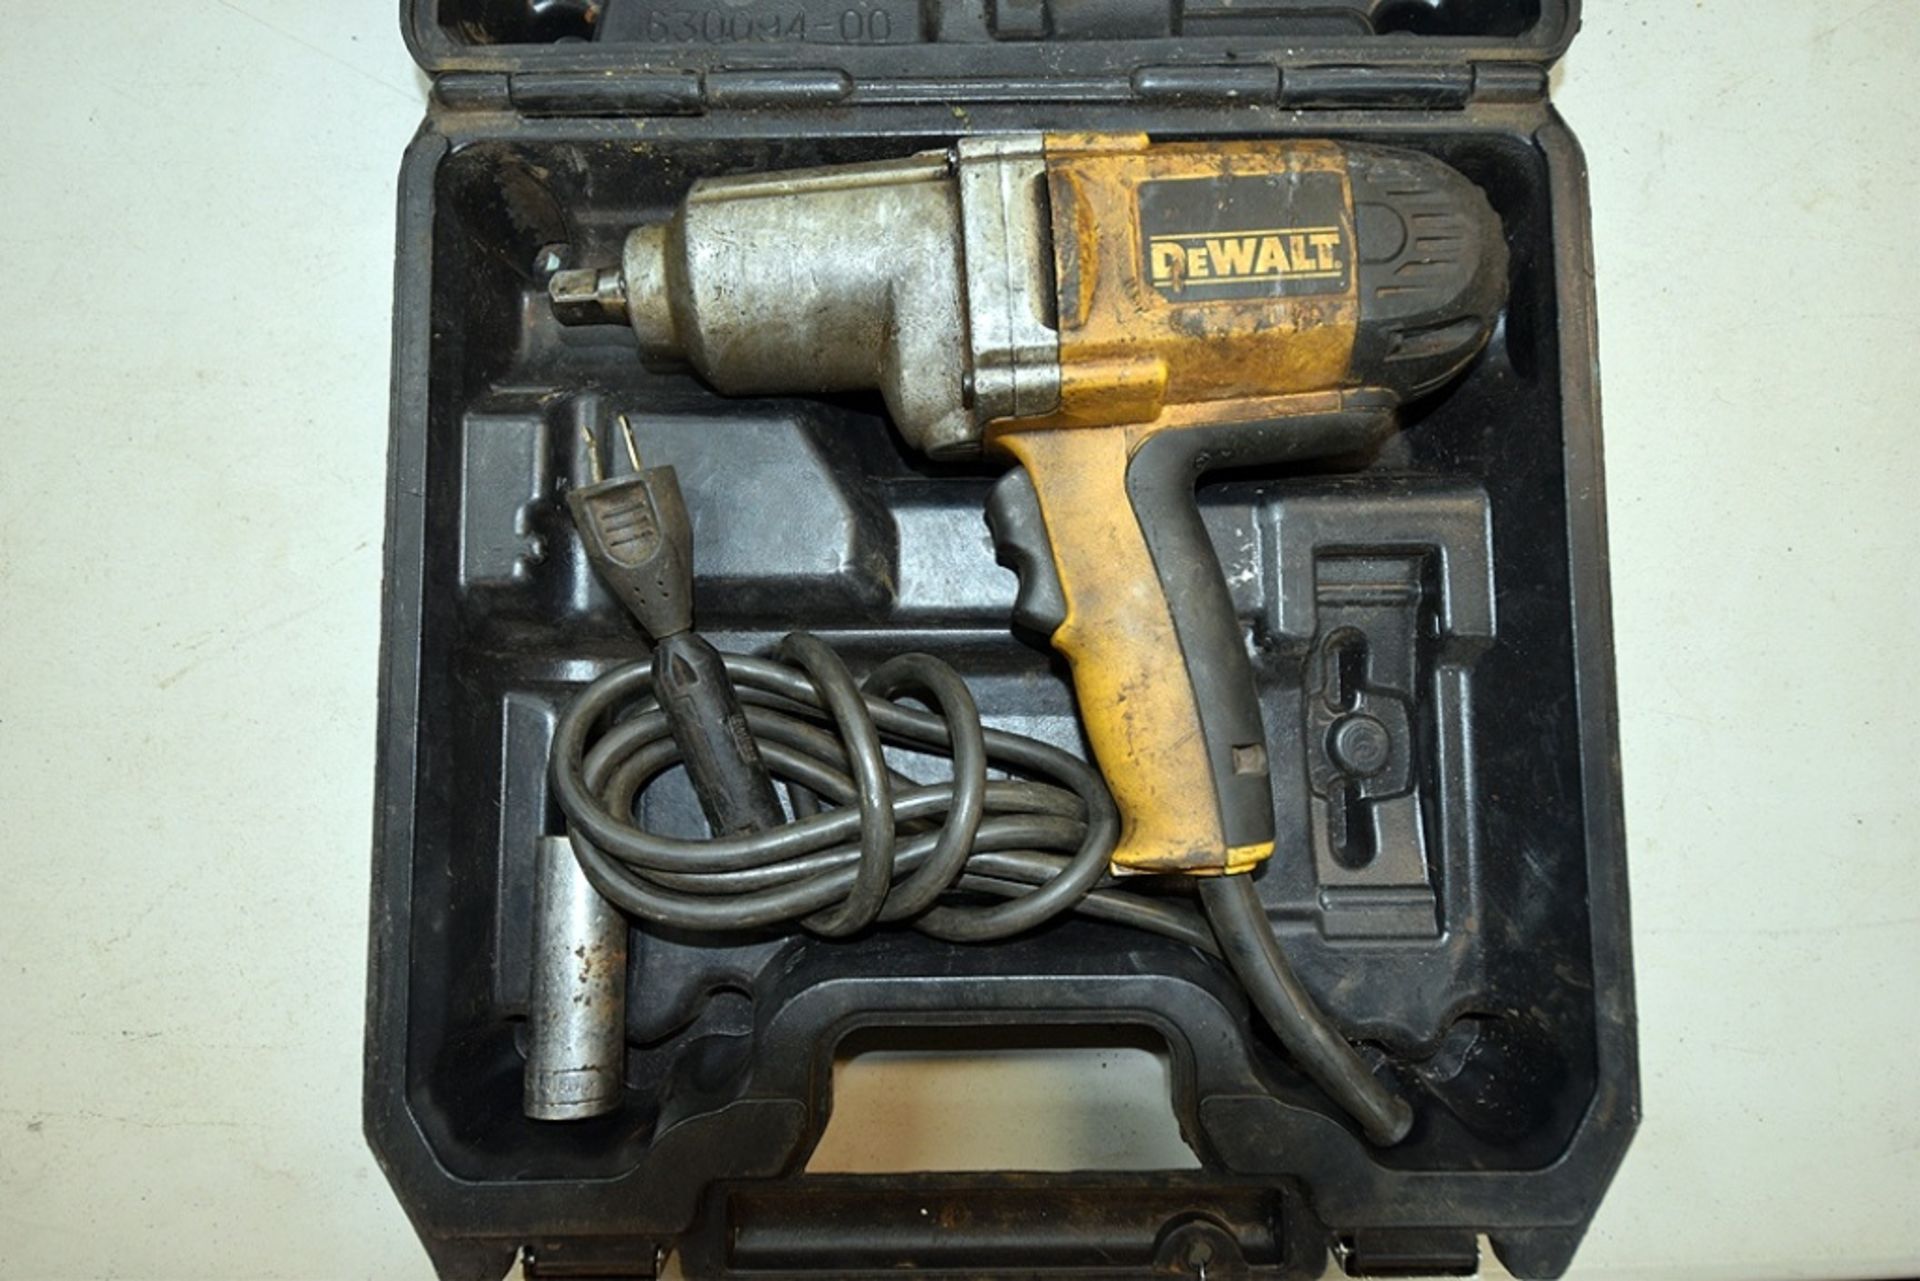 DeWalt DW292 1/2" Corded Impact Wrench w/ Case